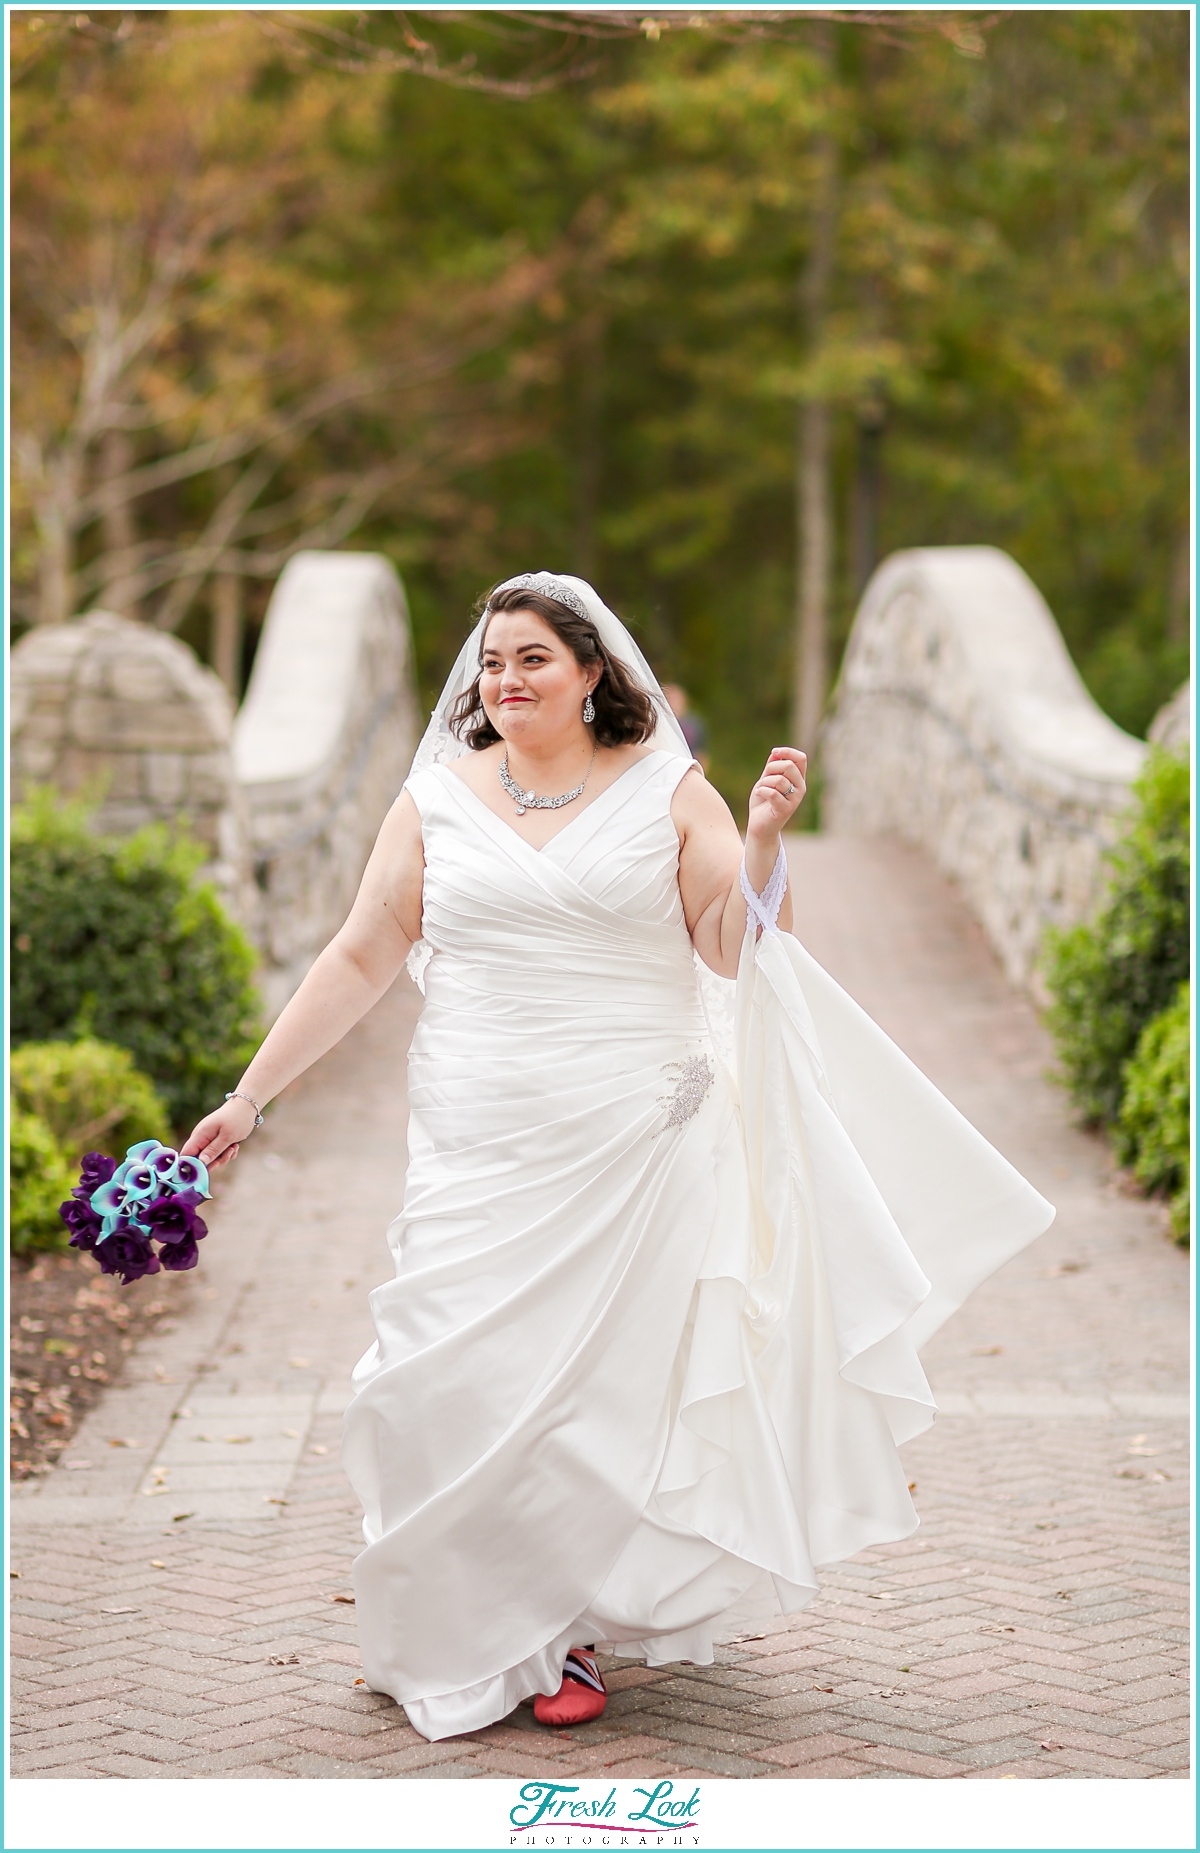 fun bride walking photos